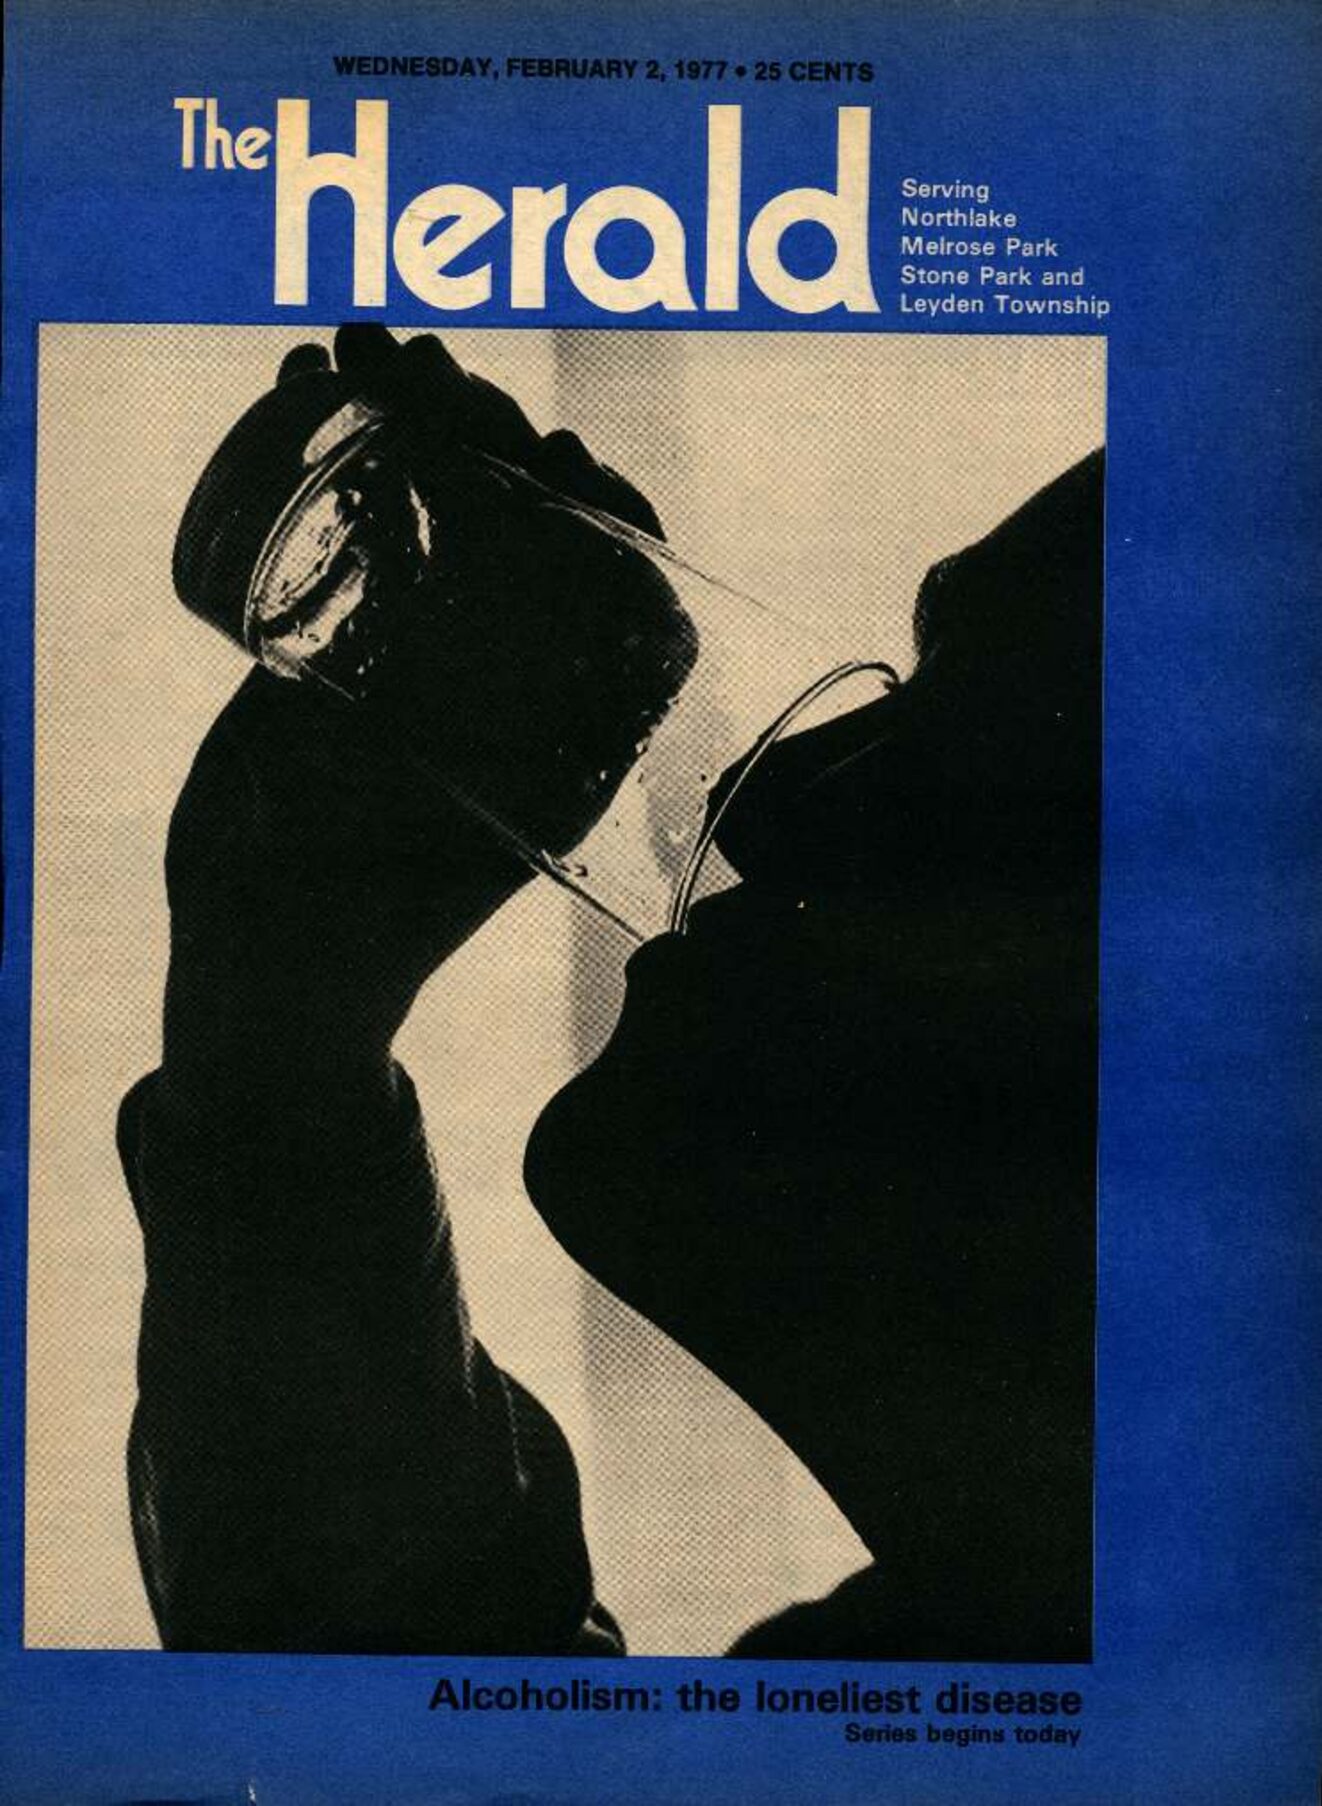 The Herald – 19770202